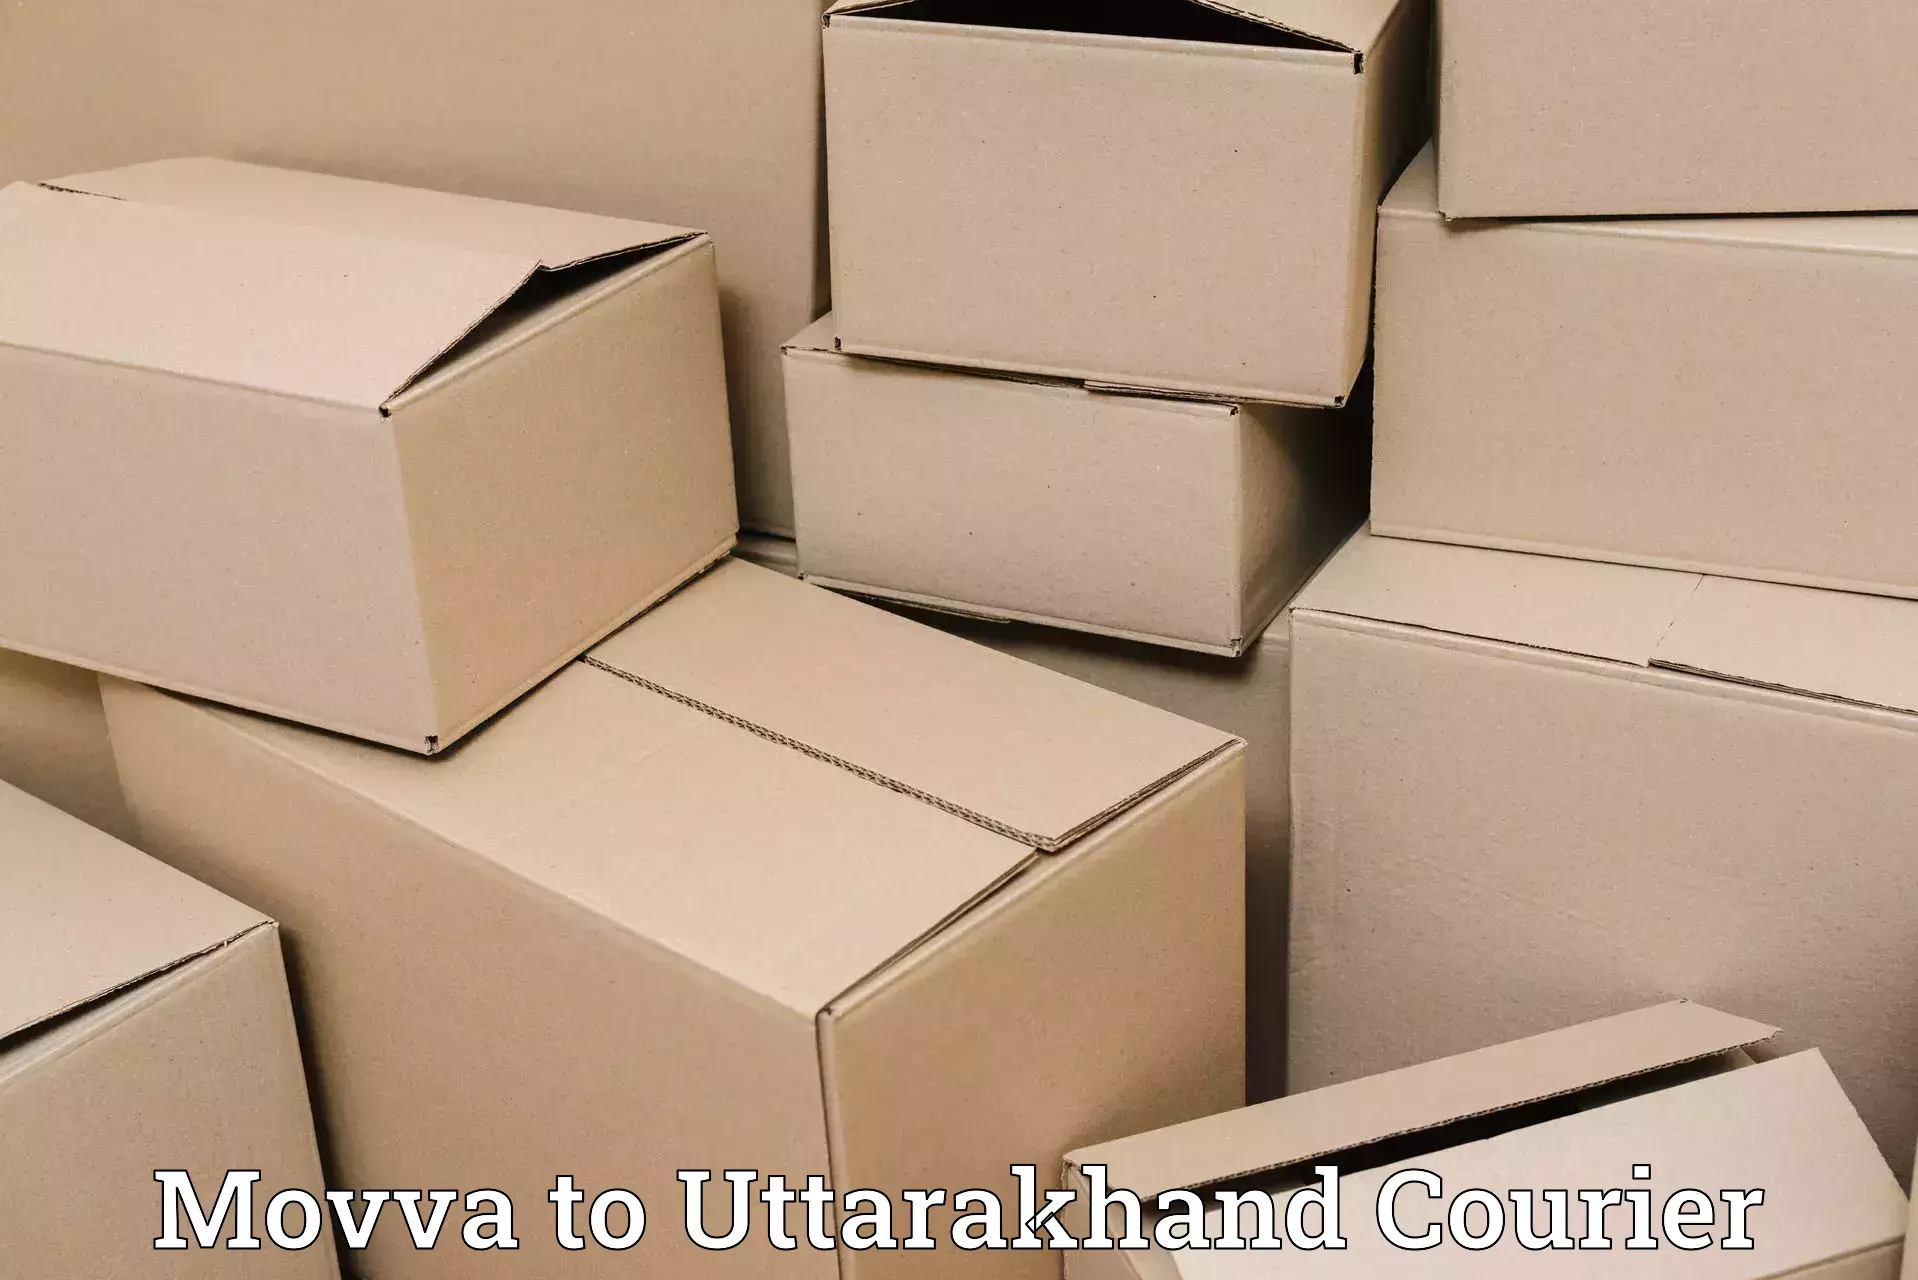 Package tracking Movva to Gopeshwar